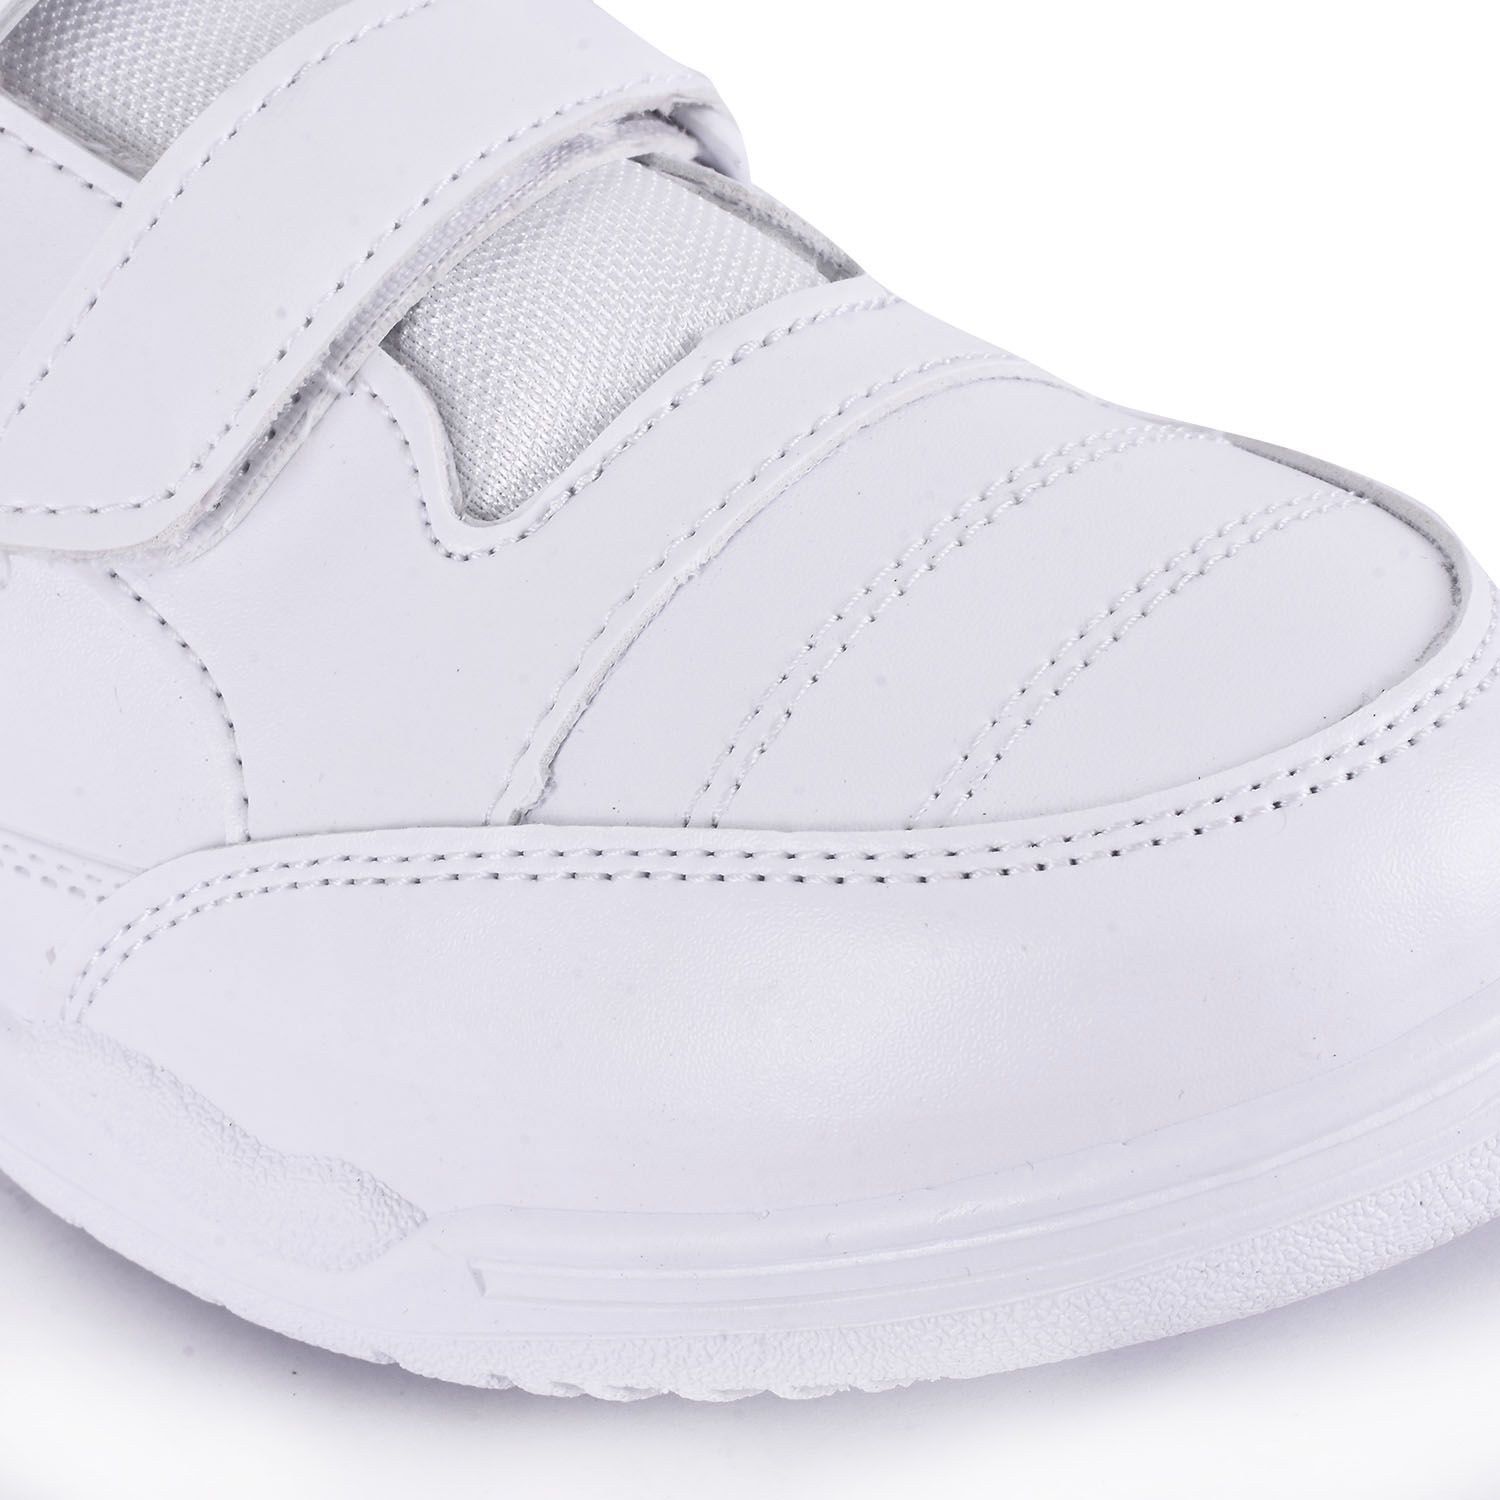 School Time CS-1260V White school shoes for boys Price in India- Buy ...